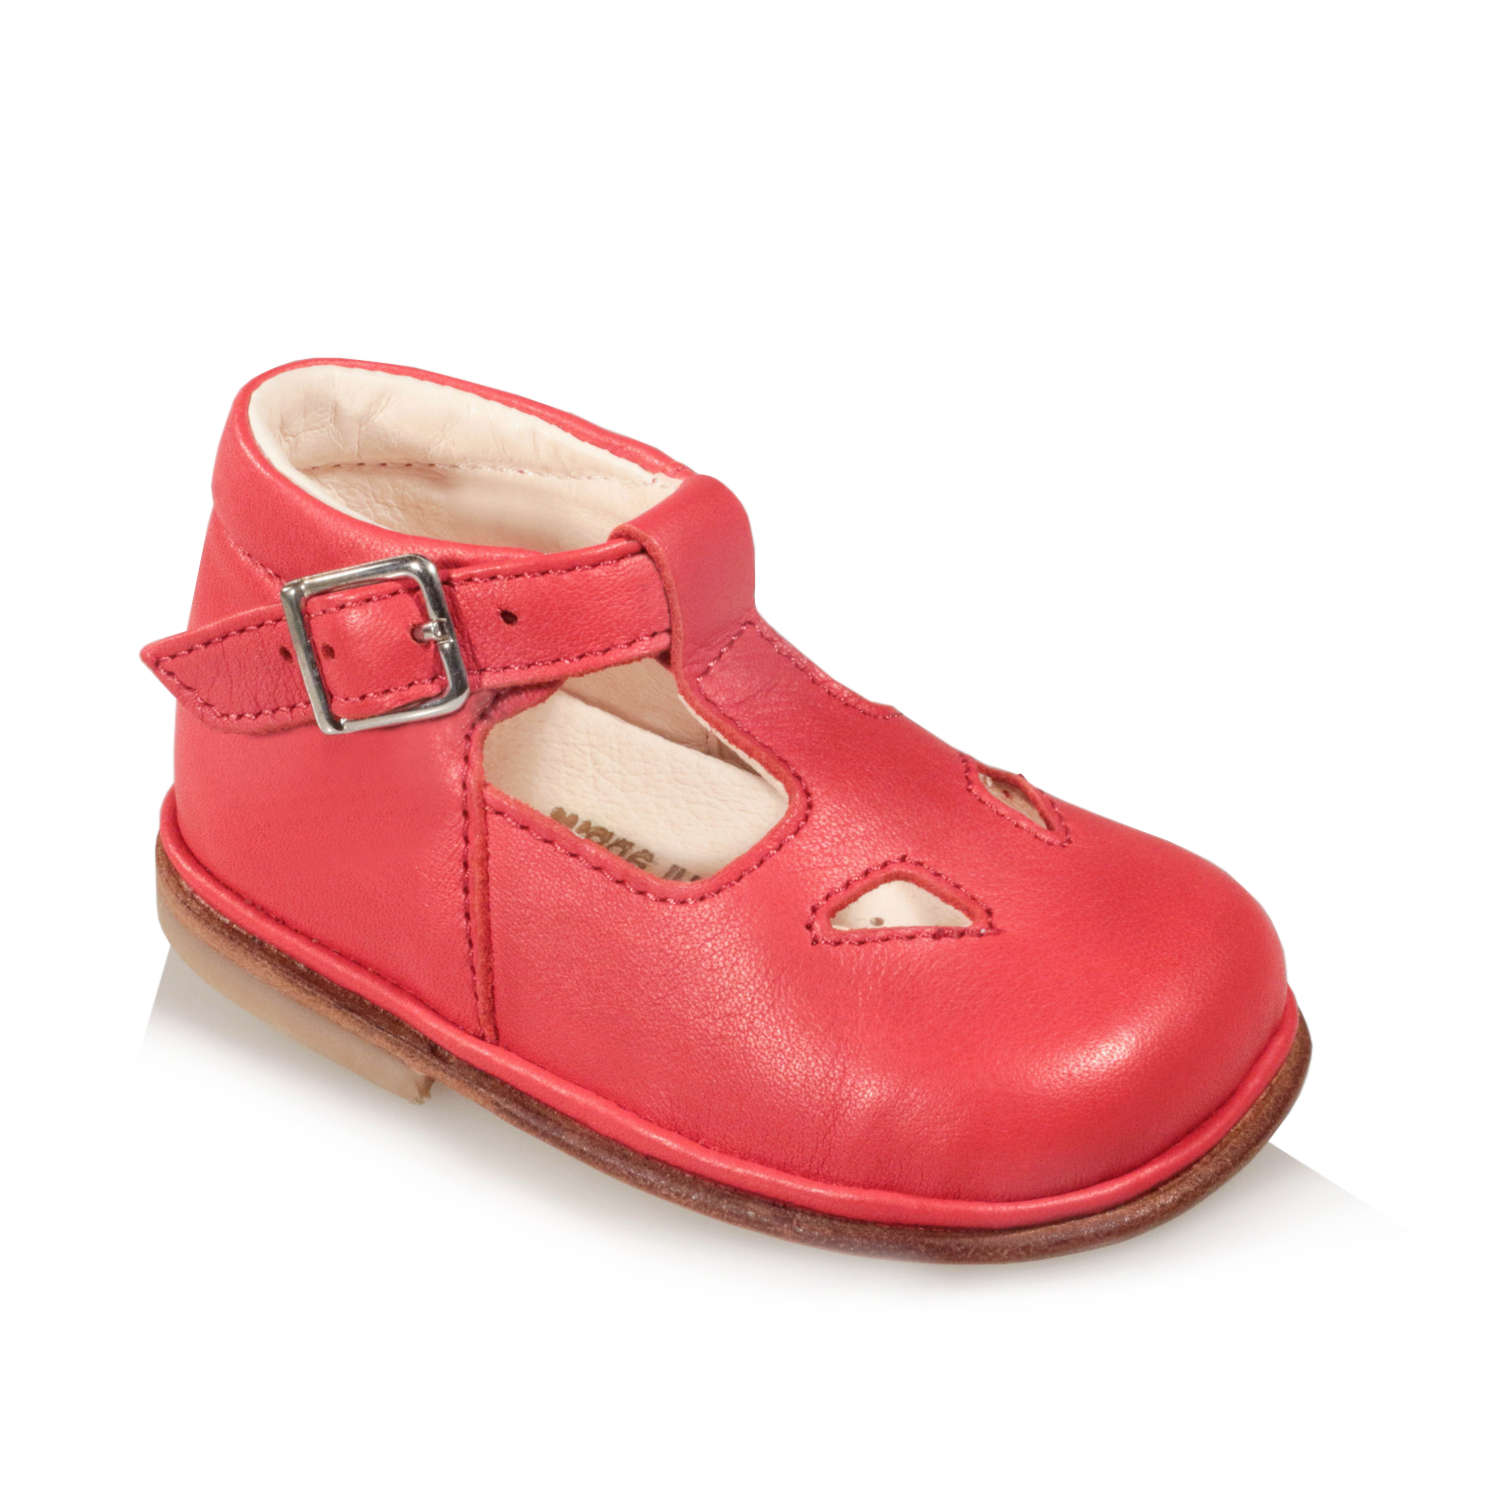 scarpe bambina rosse